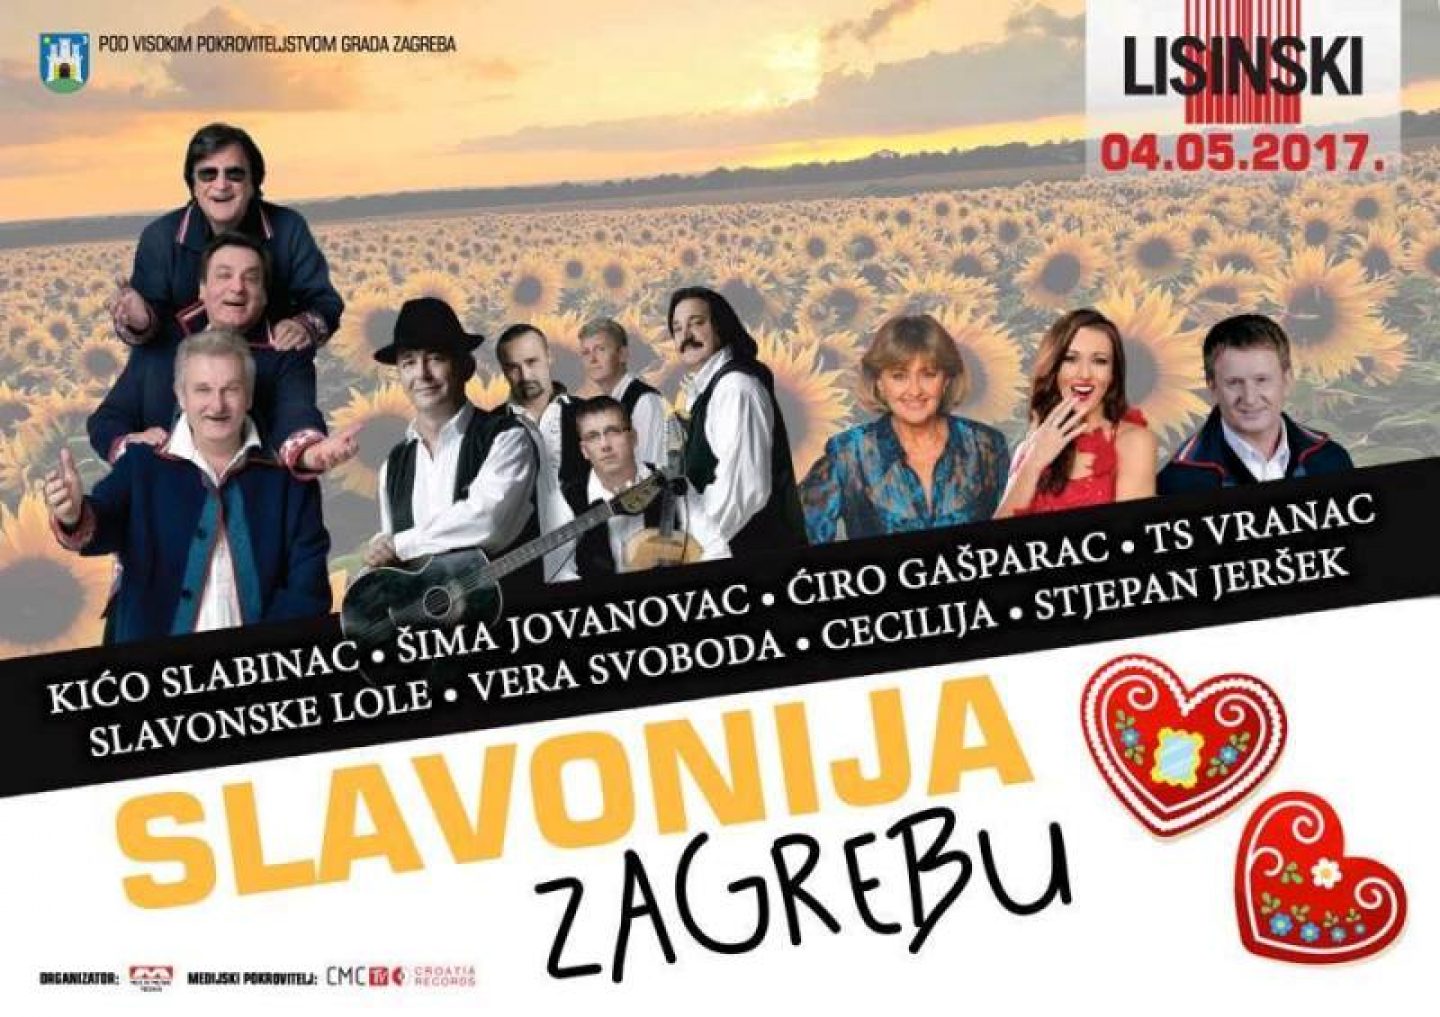 Koncert “Slavonija Zagrebu” u Lisinskom